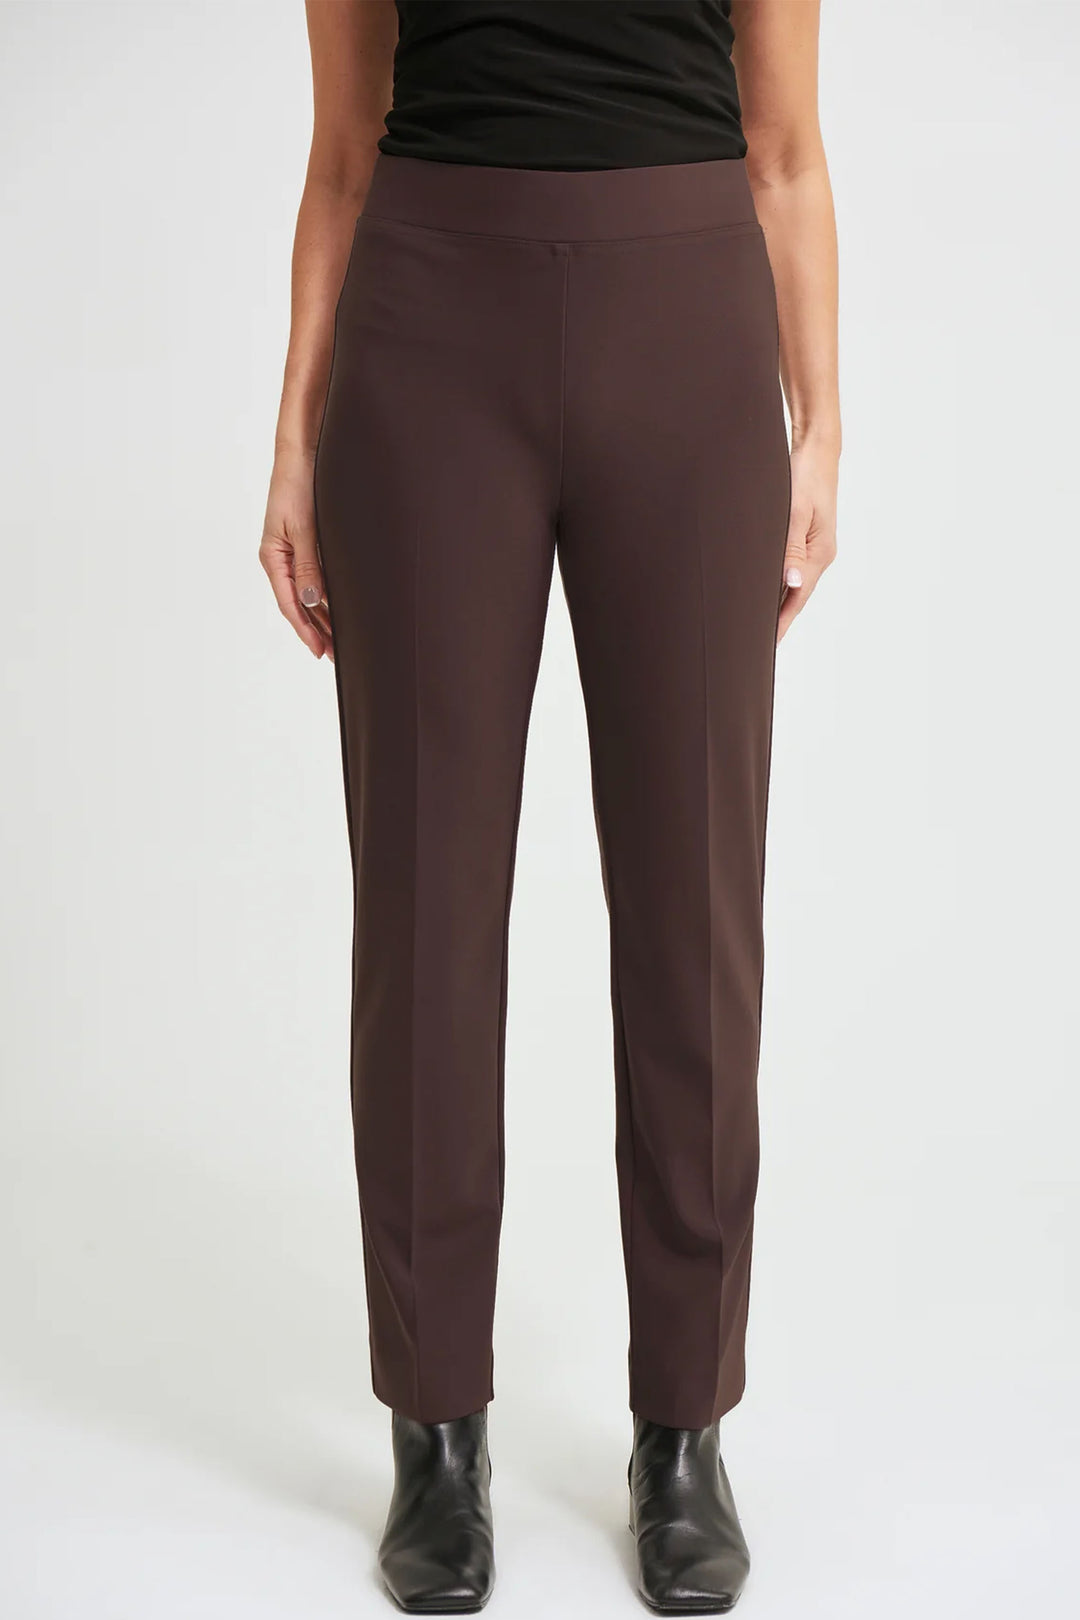 Joseph Ribkoff women's business casual slim fit basic pull-on pant - chocolate